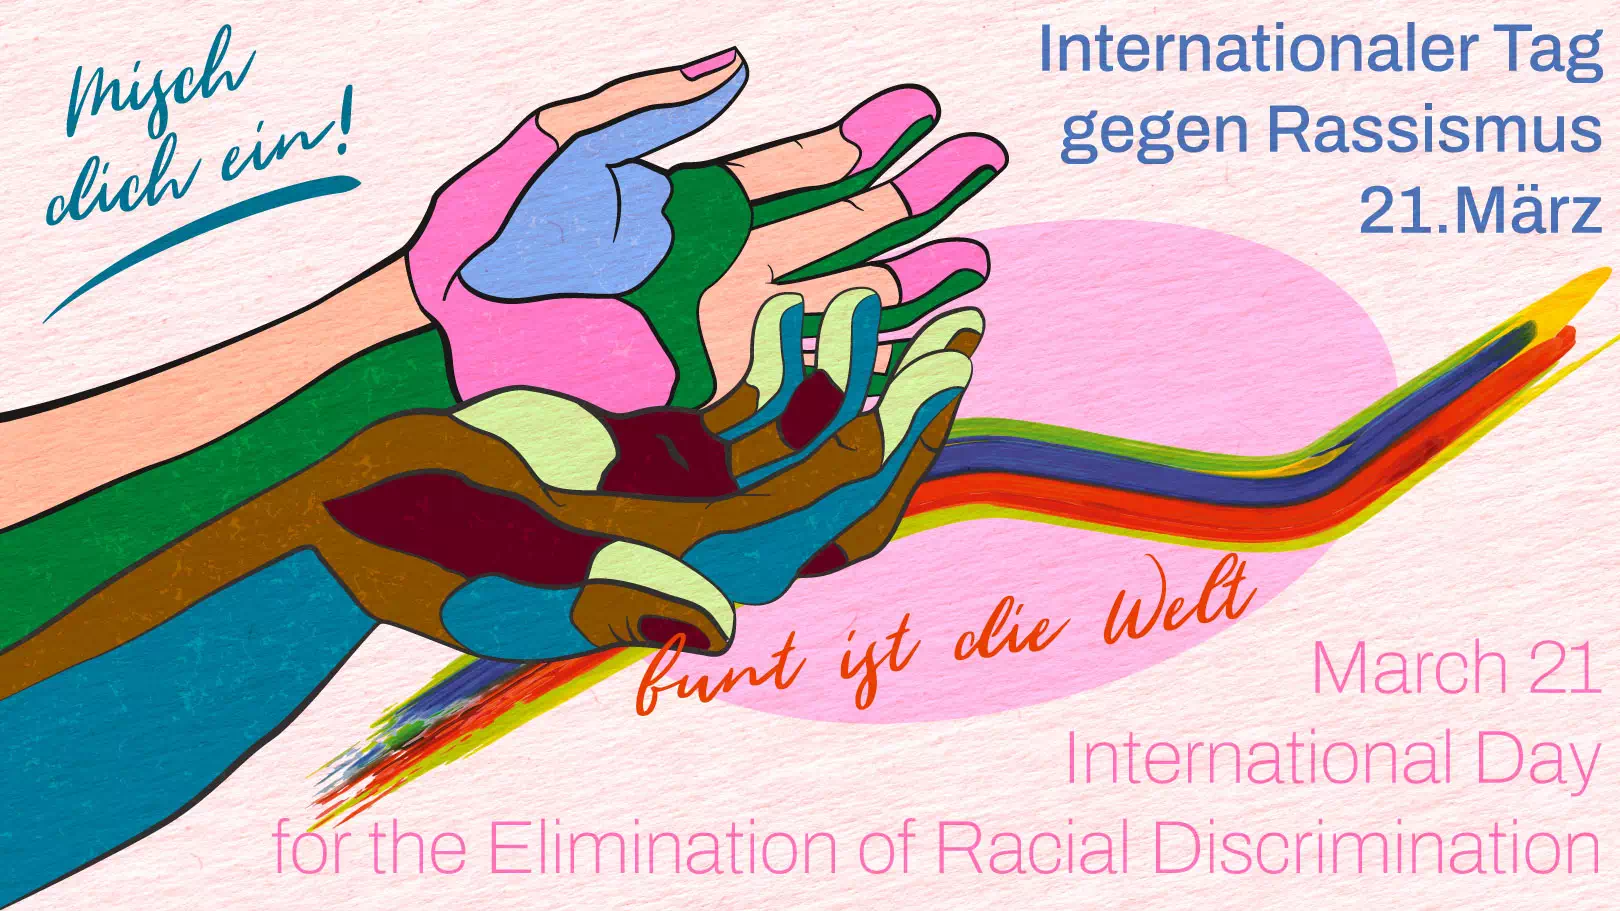 Internationaler Tag gegen Rassismus,  International Day for the Elimination of Racial Discrimination